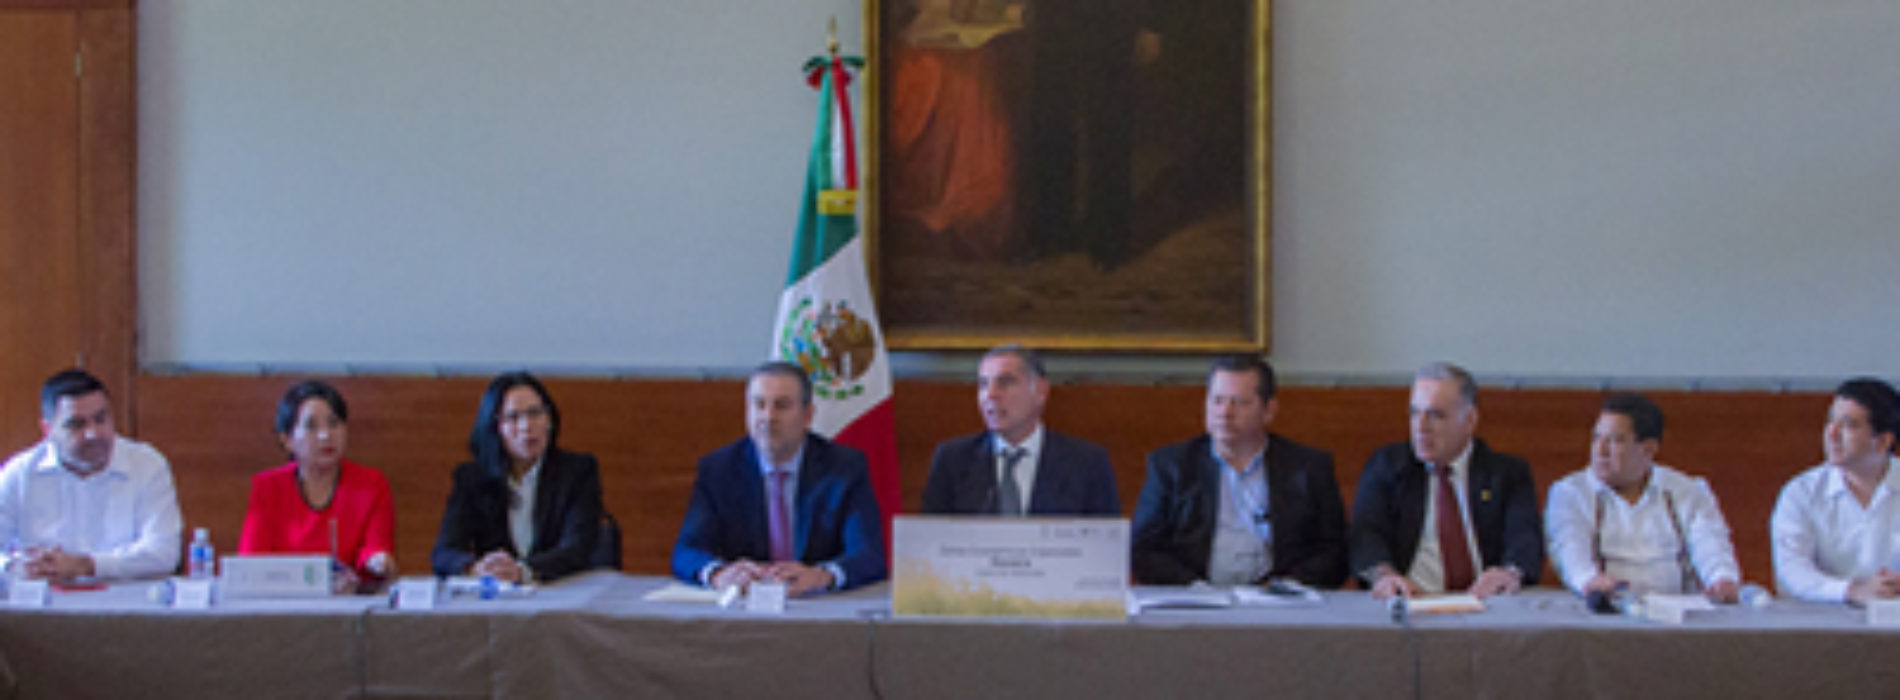 Istmo de Tehuantepec, polo estratégico para invertir en Zonas Económicas Especiales: Gabino Cué